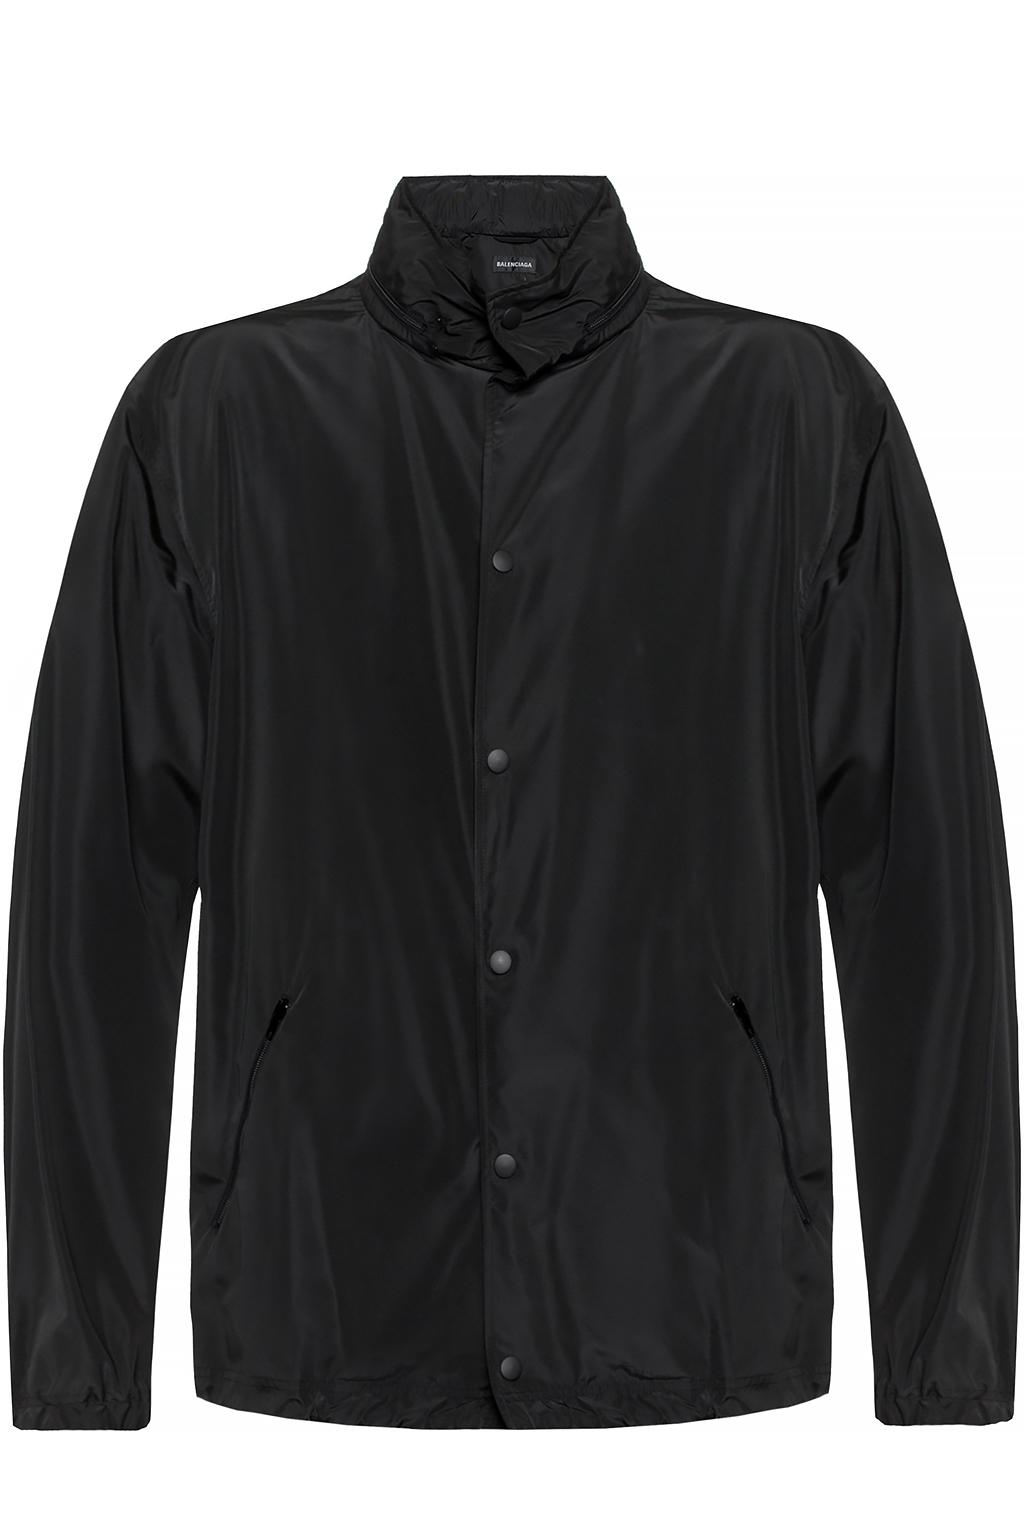 Oversize' rain jacket Balenciaga - Vitkac Singapore